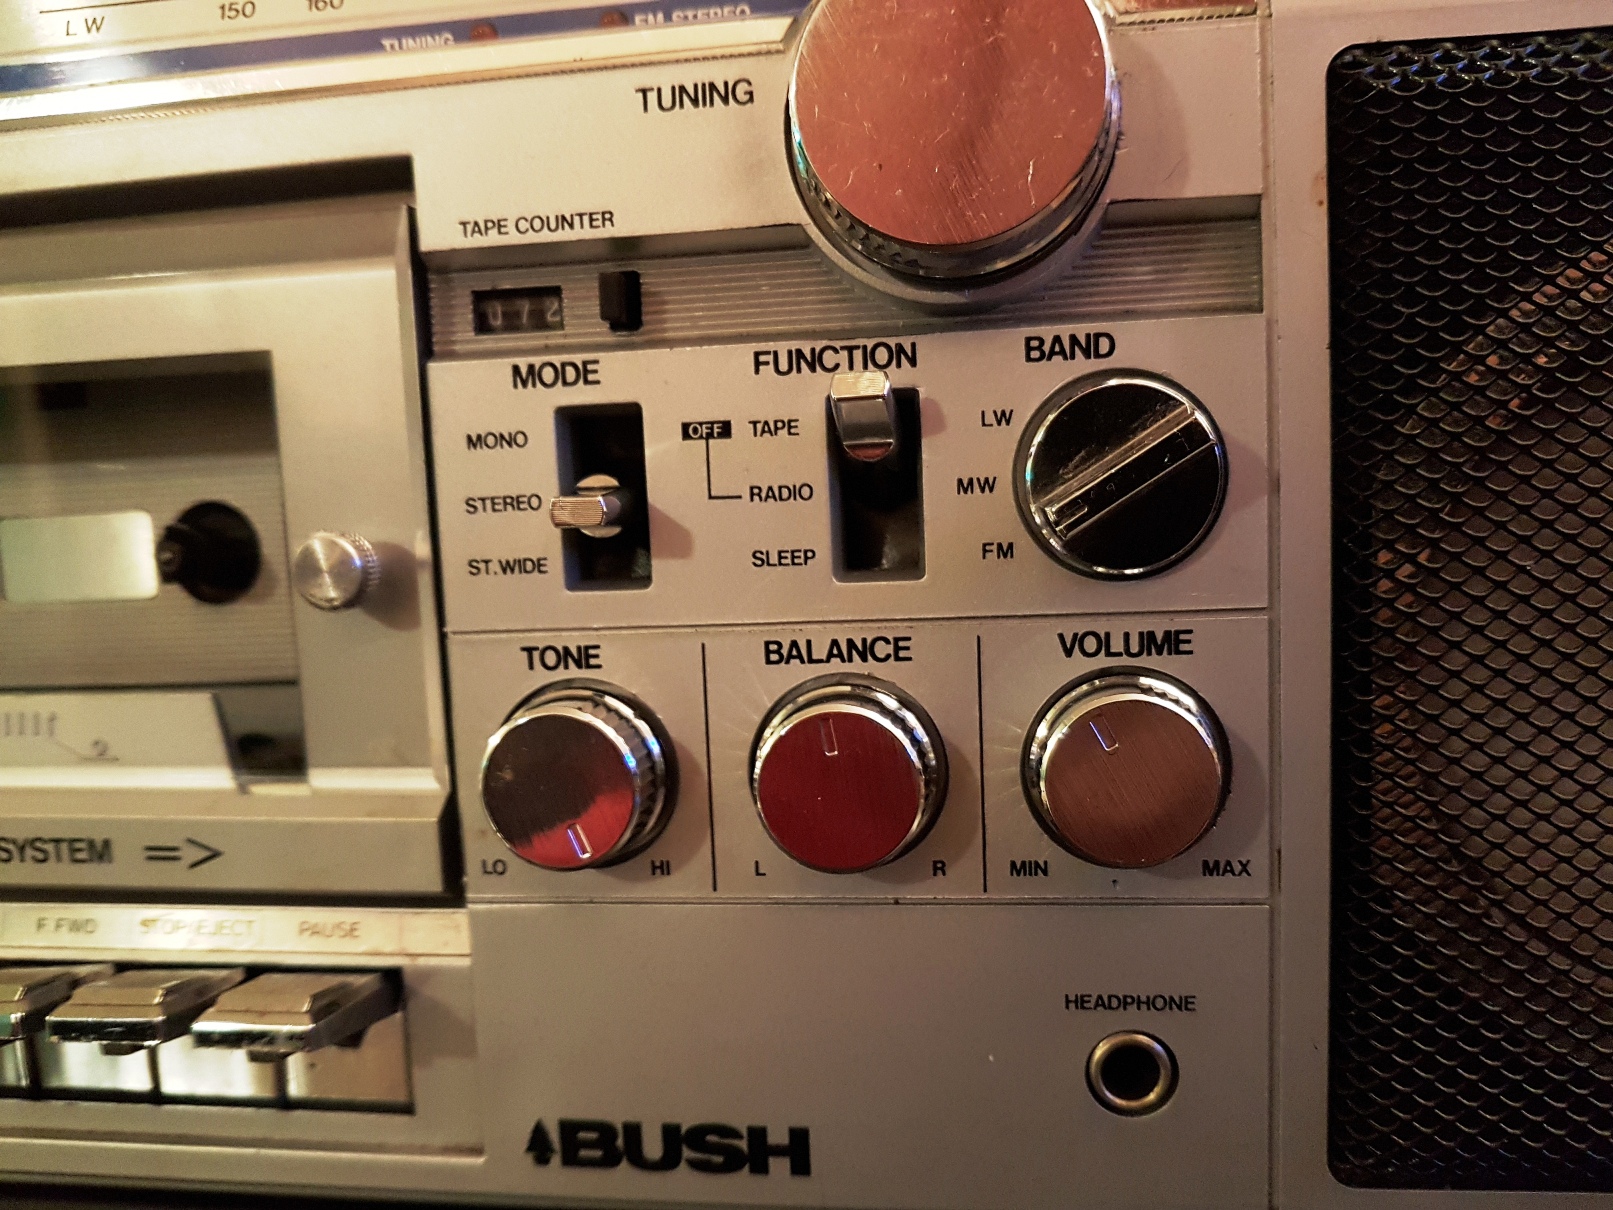 Bush 7080 Stereo Radio Recorder - February 2018 (19).jpg